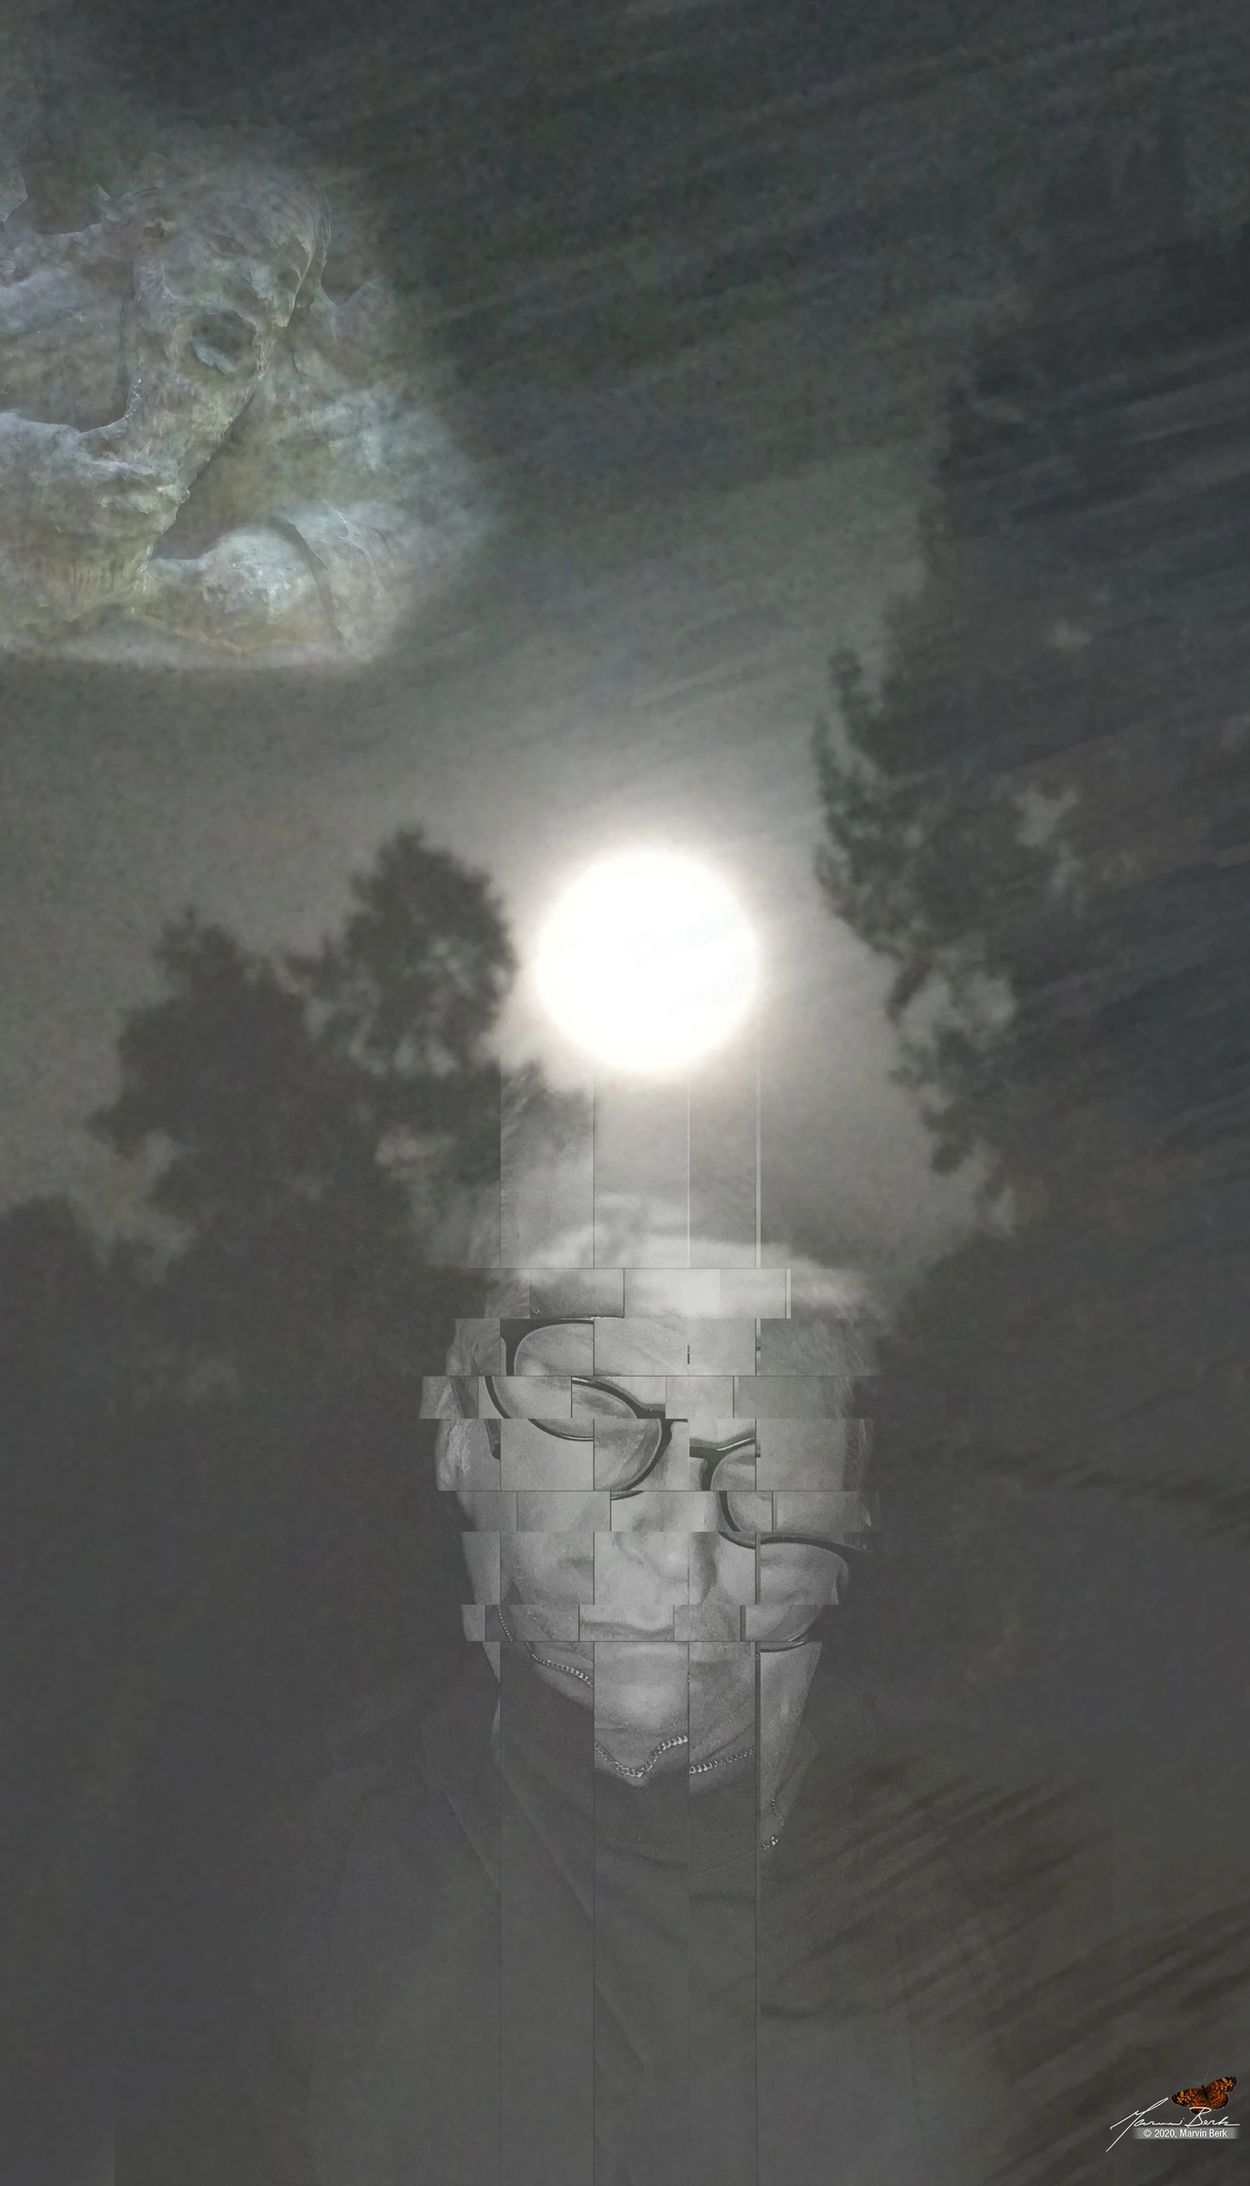 Marvin Berk, self portrait, photomontage moonlight dreams of influence in San Miguel de Allende.